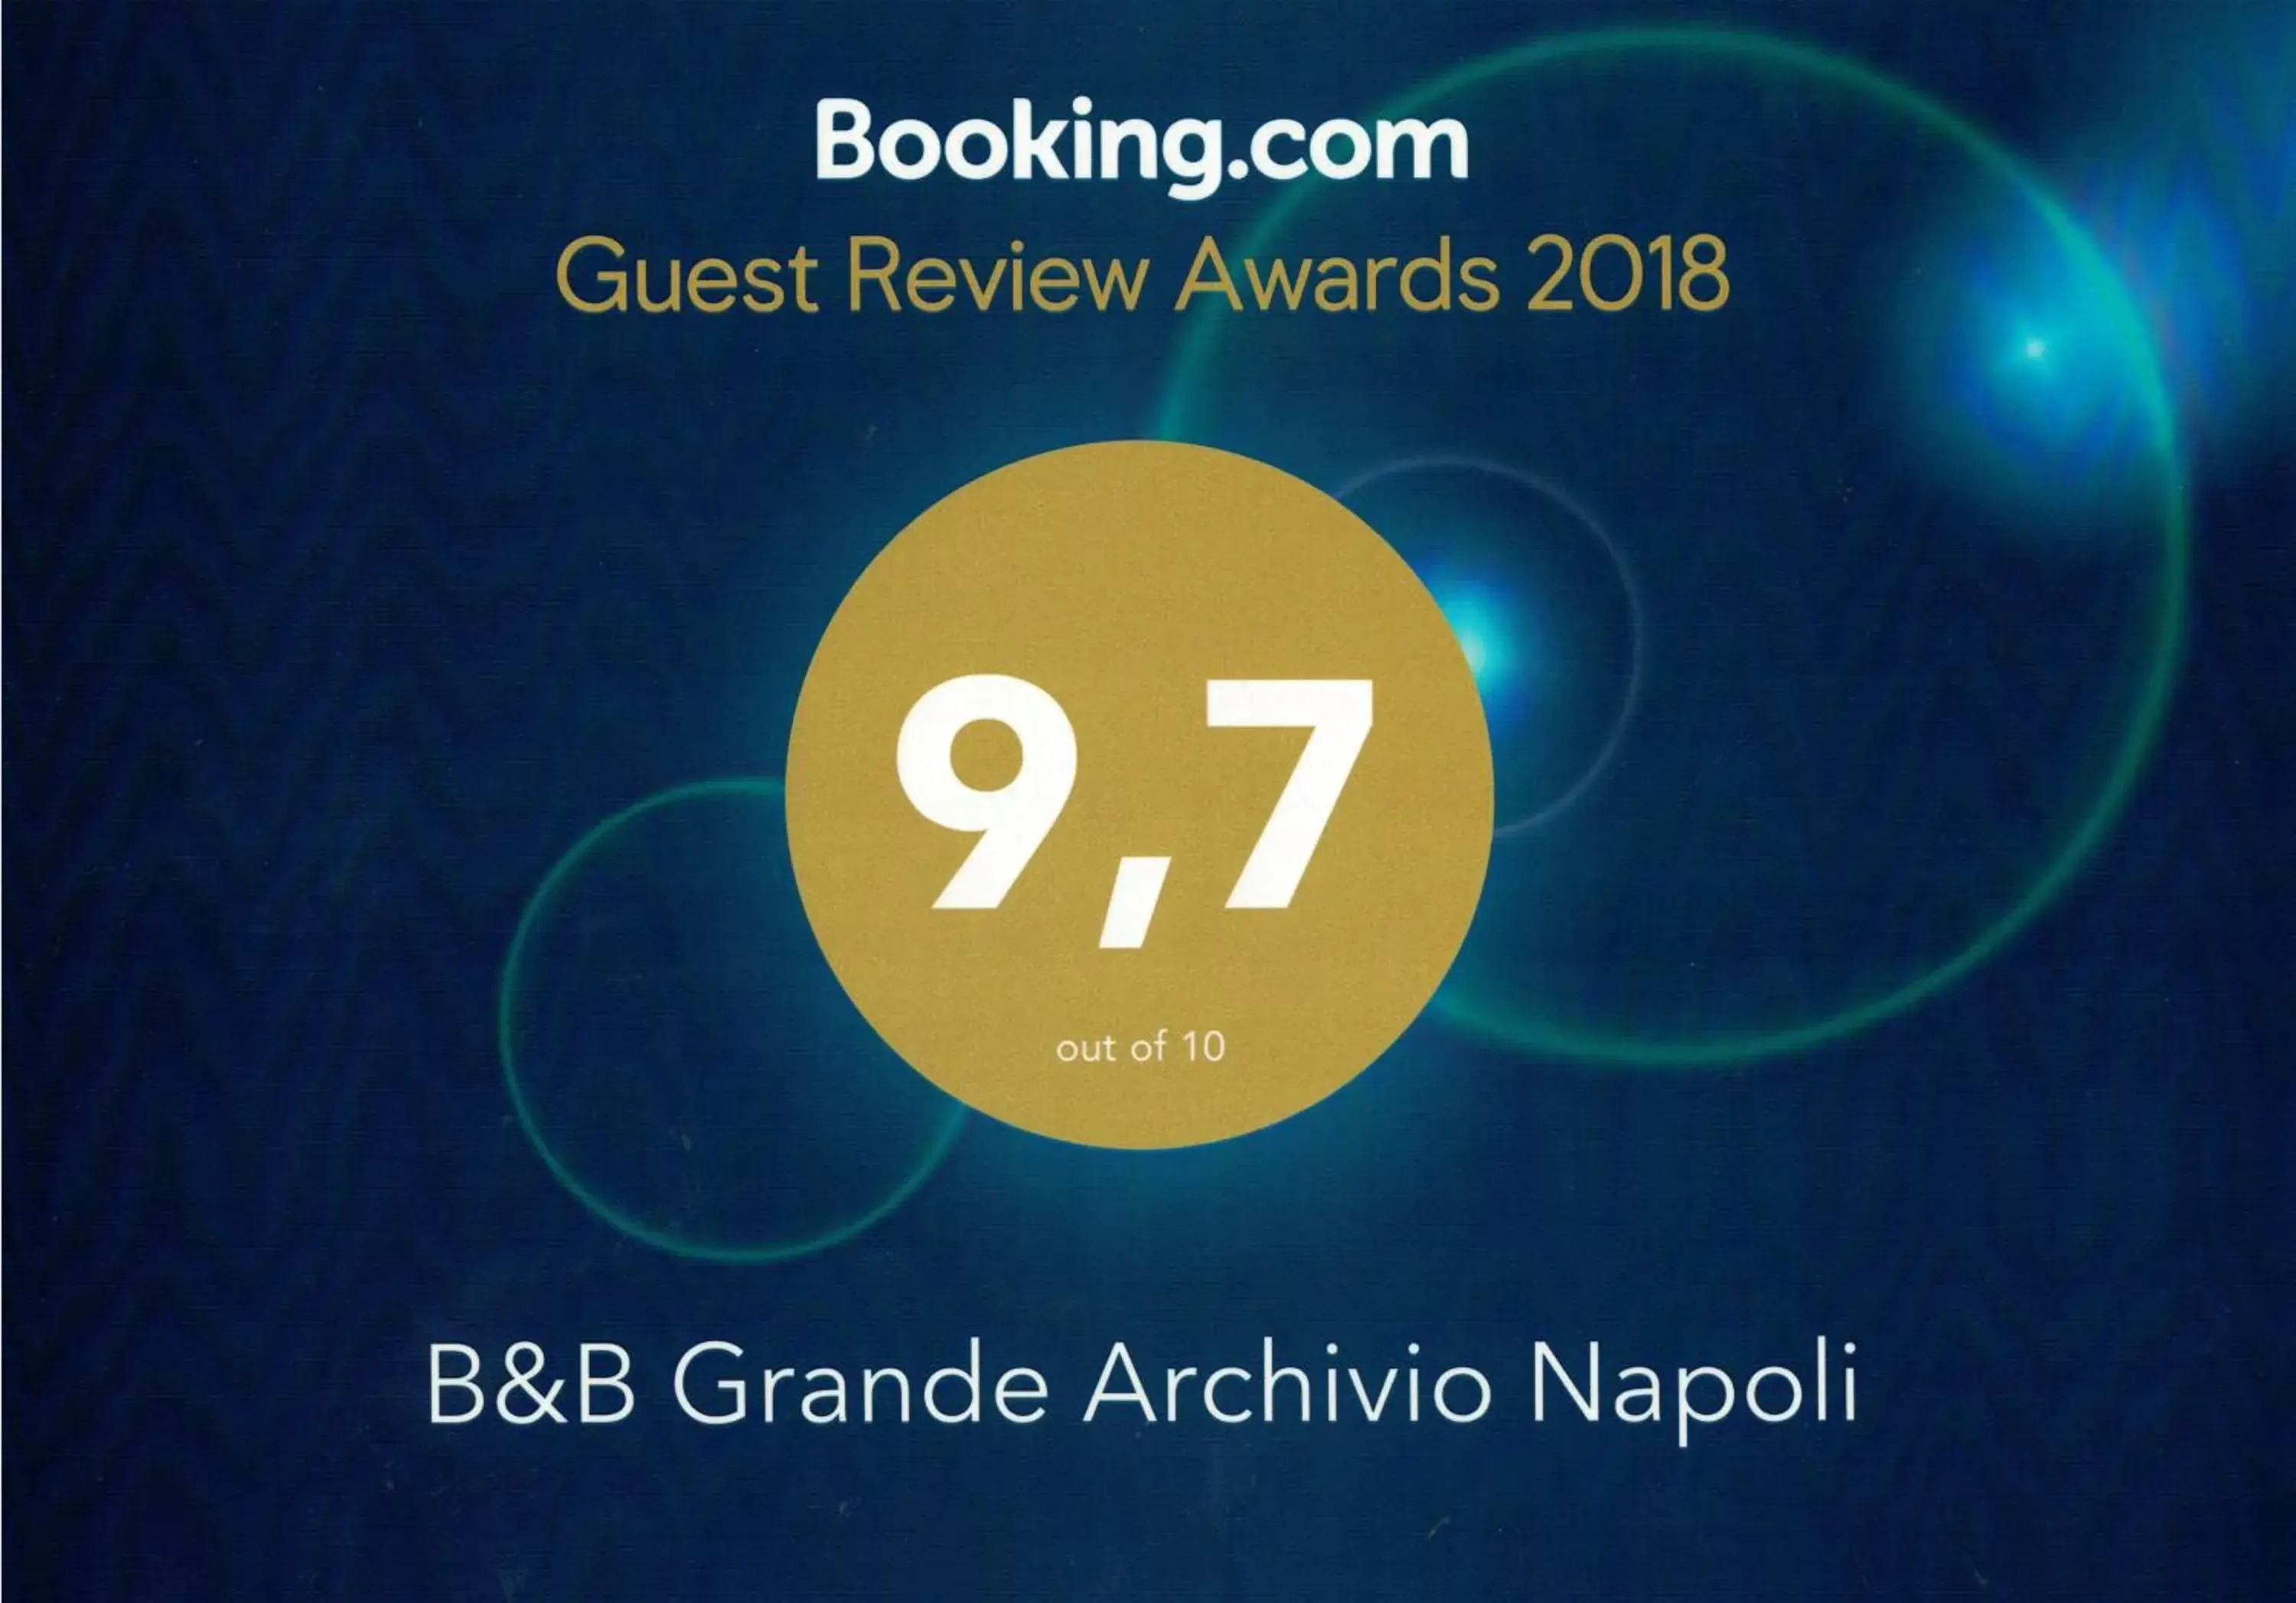 Certificate/Award in B&B Grande Archivio Napoli